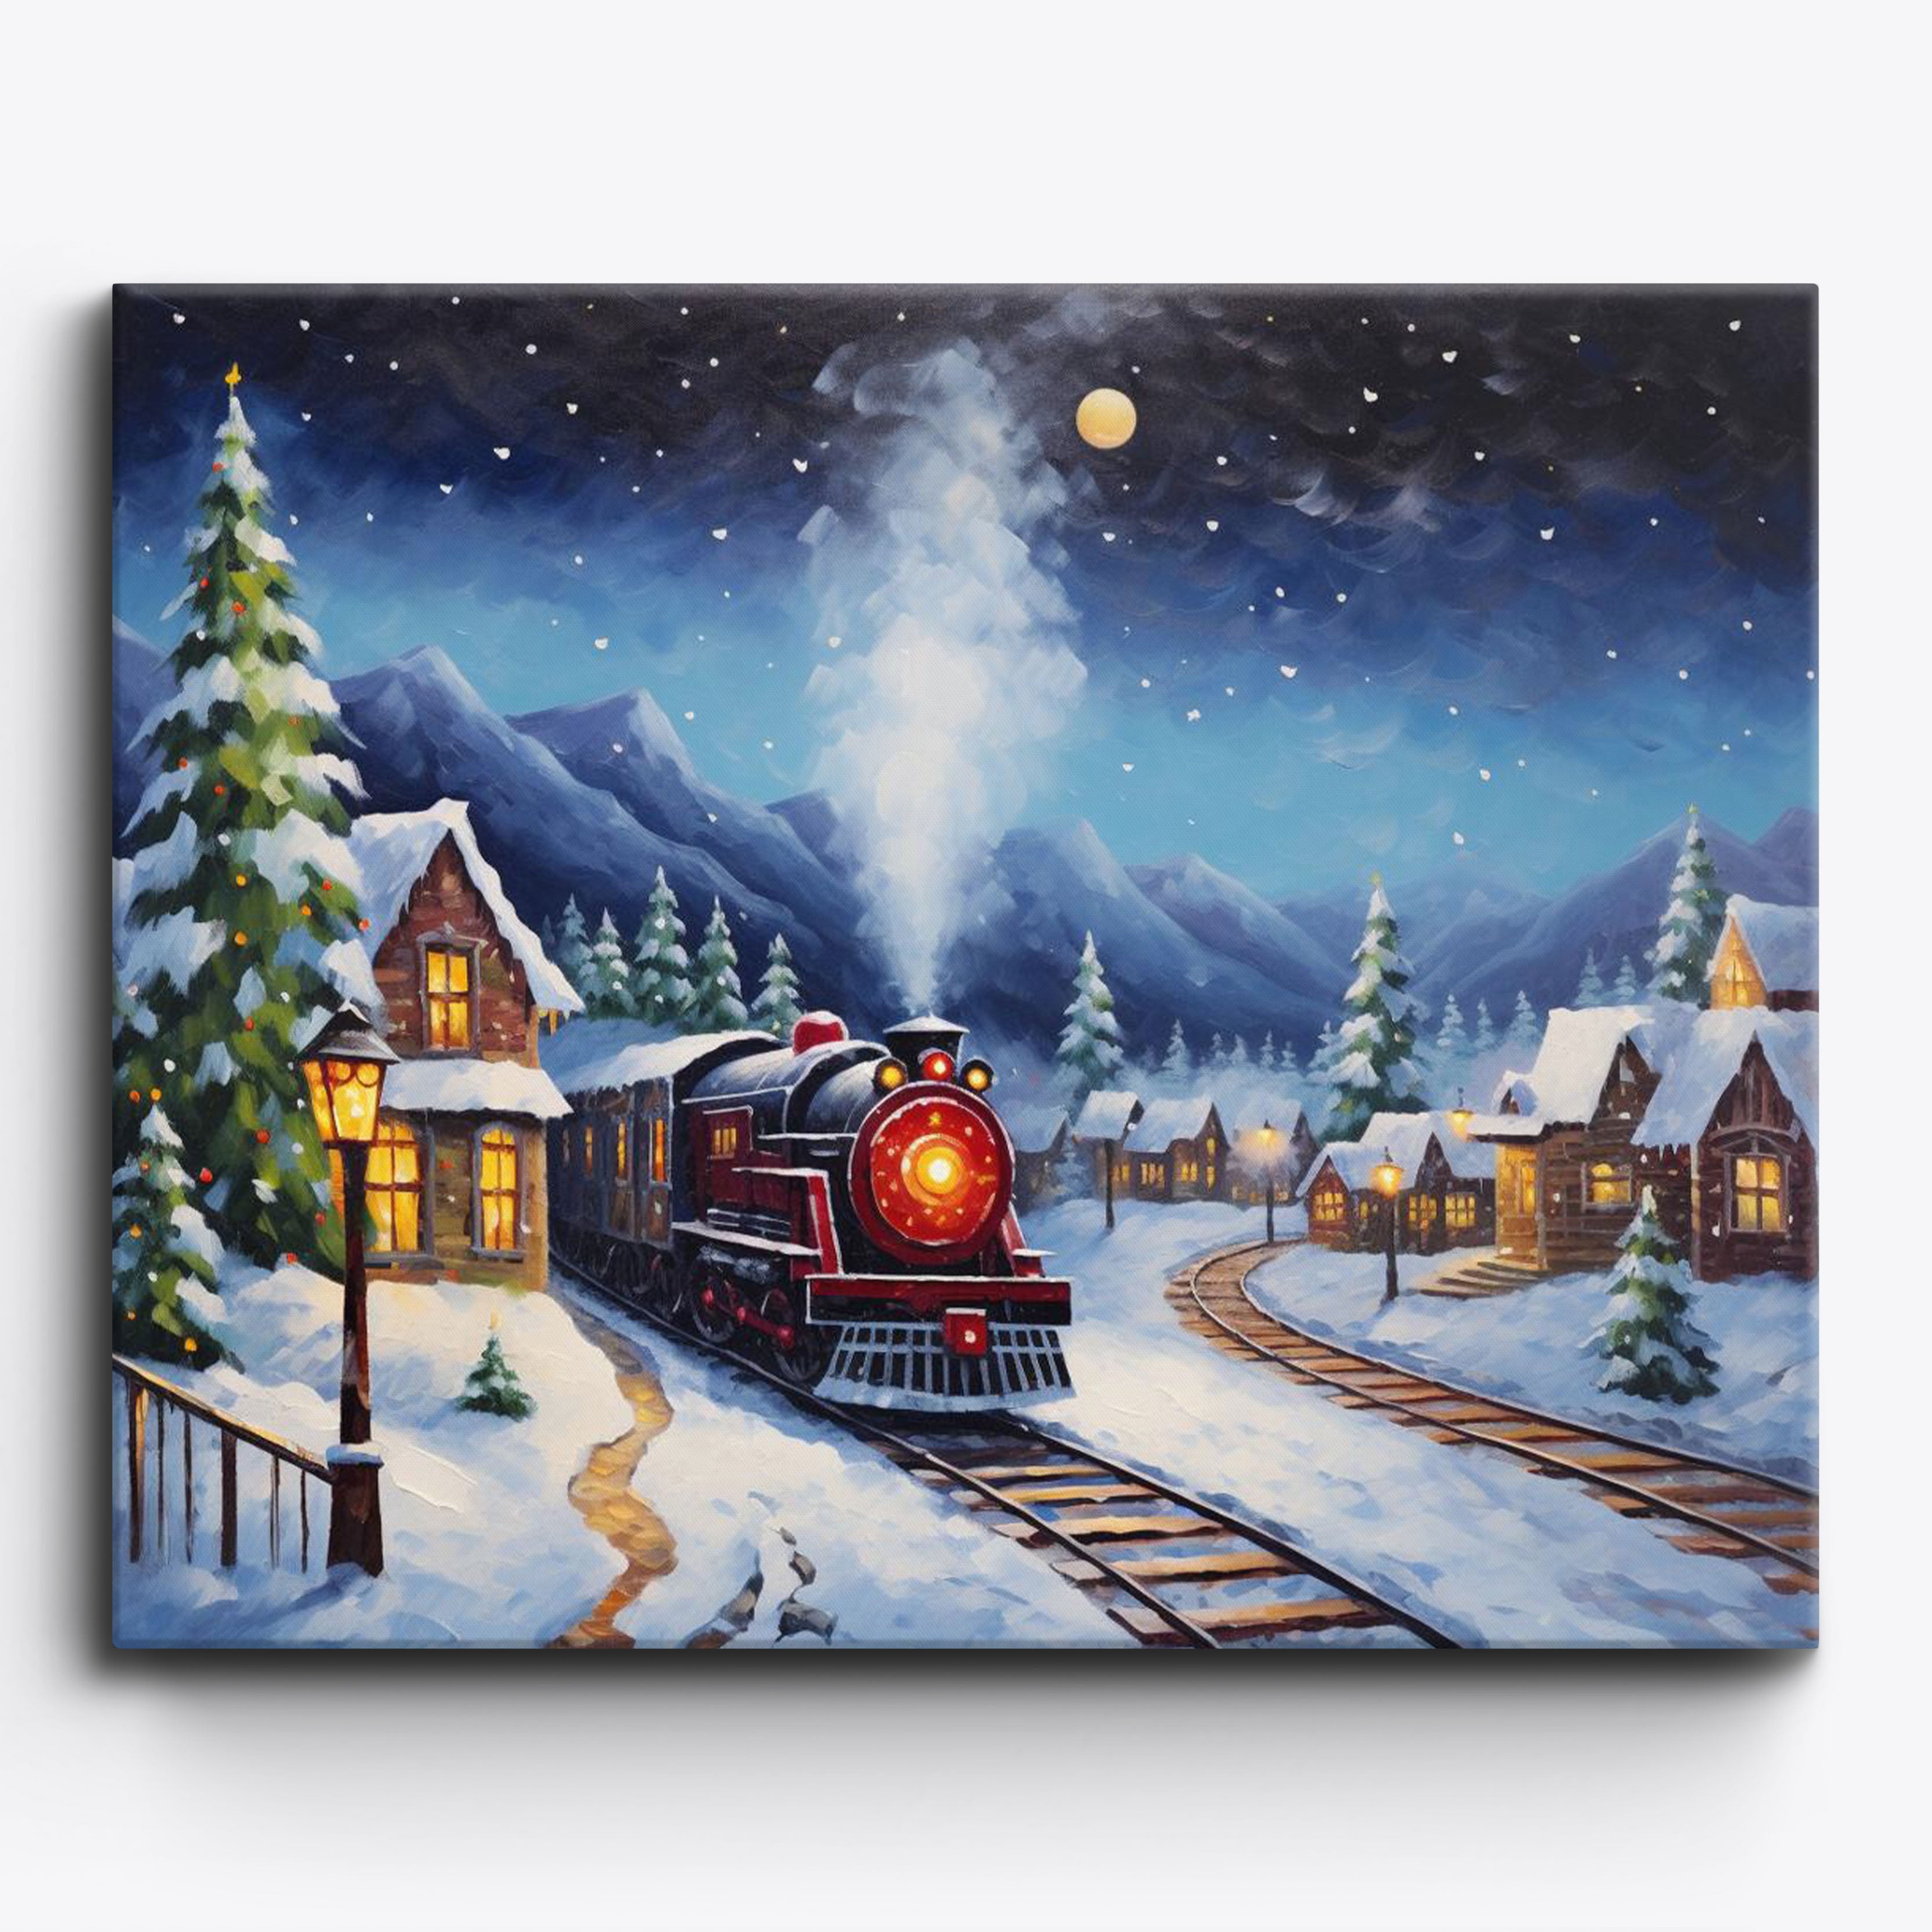 Snow-Clad Village Train No Frame